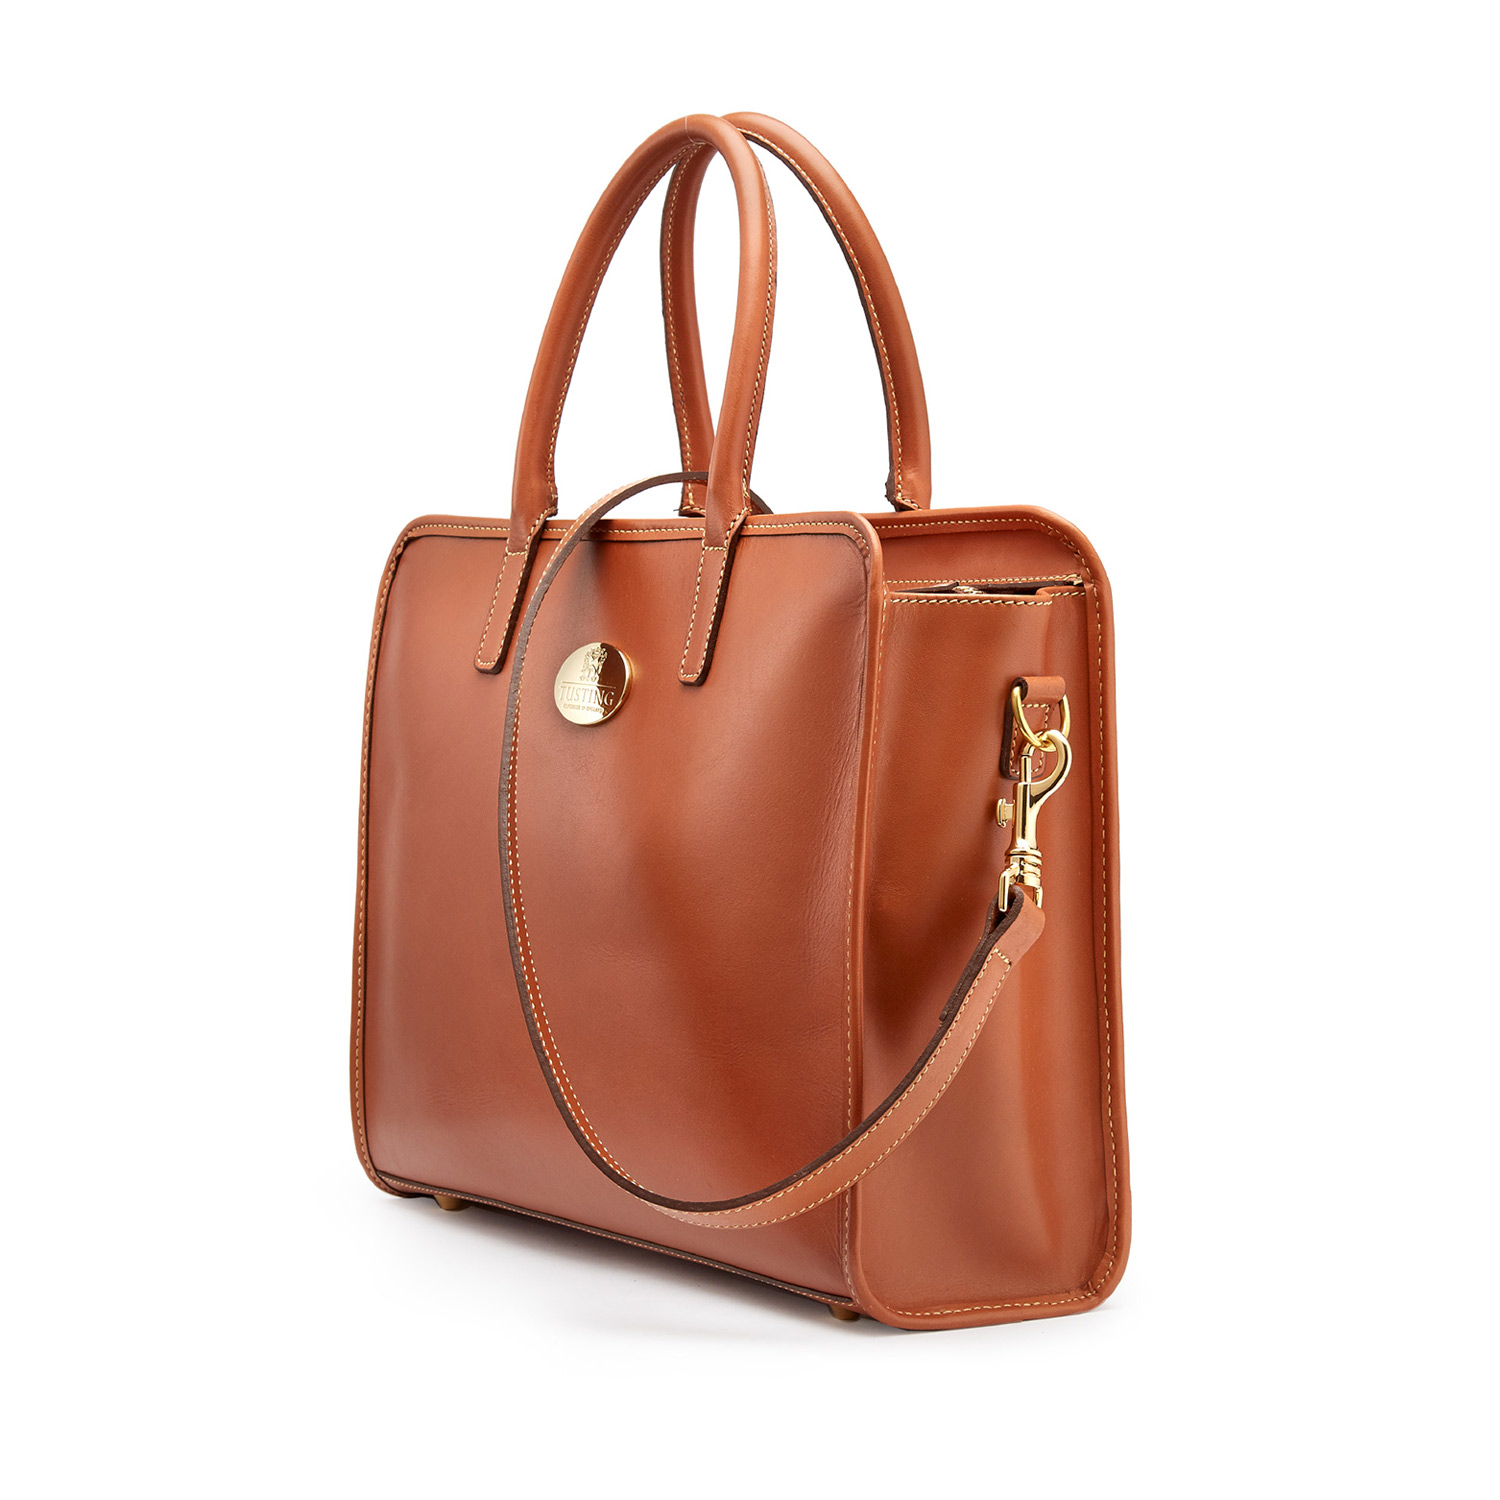 Catherine Luxury Leather Handbag Ladies Briefcase from Tusting